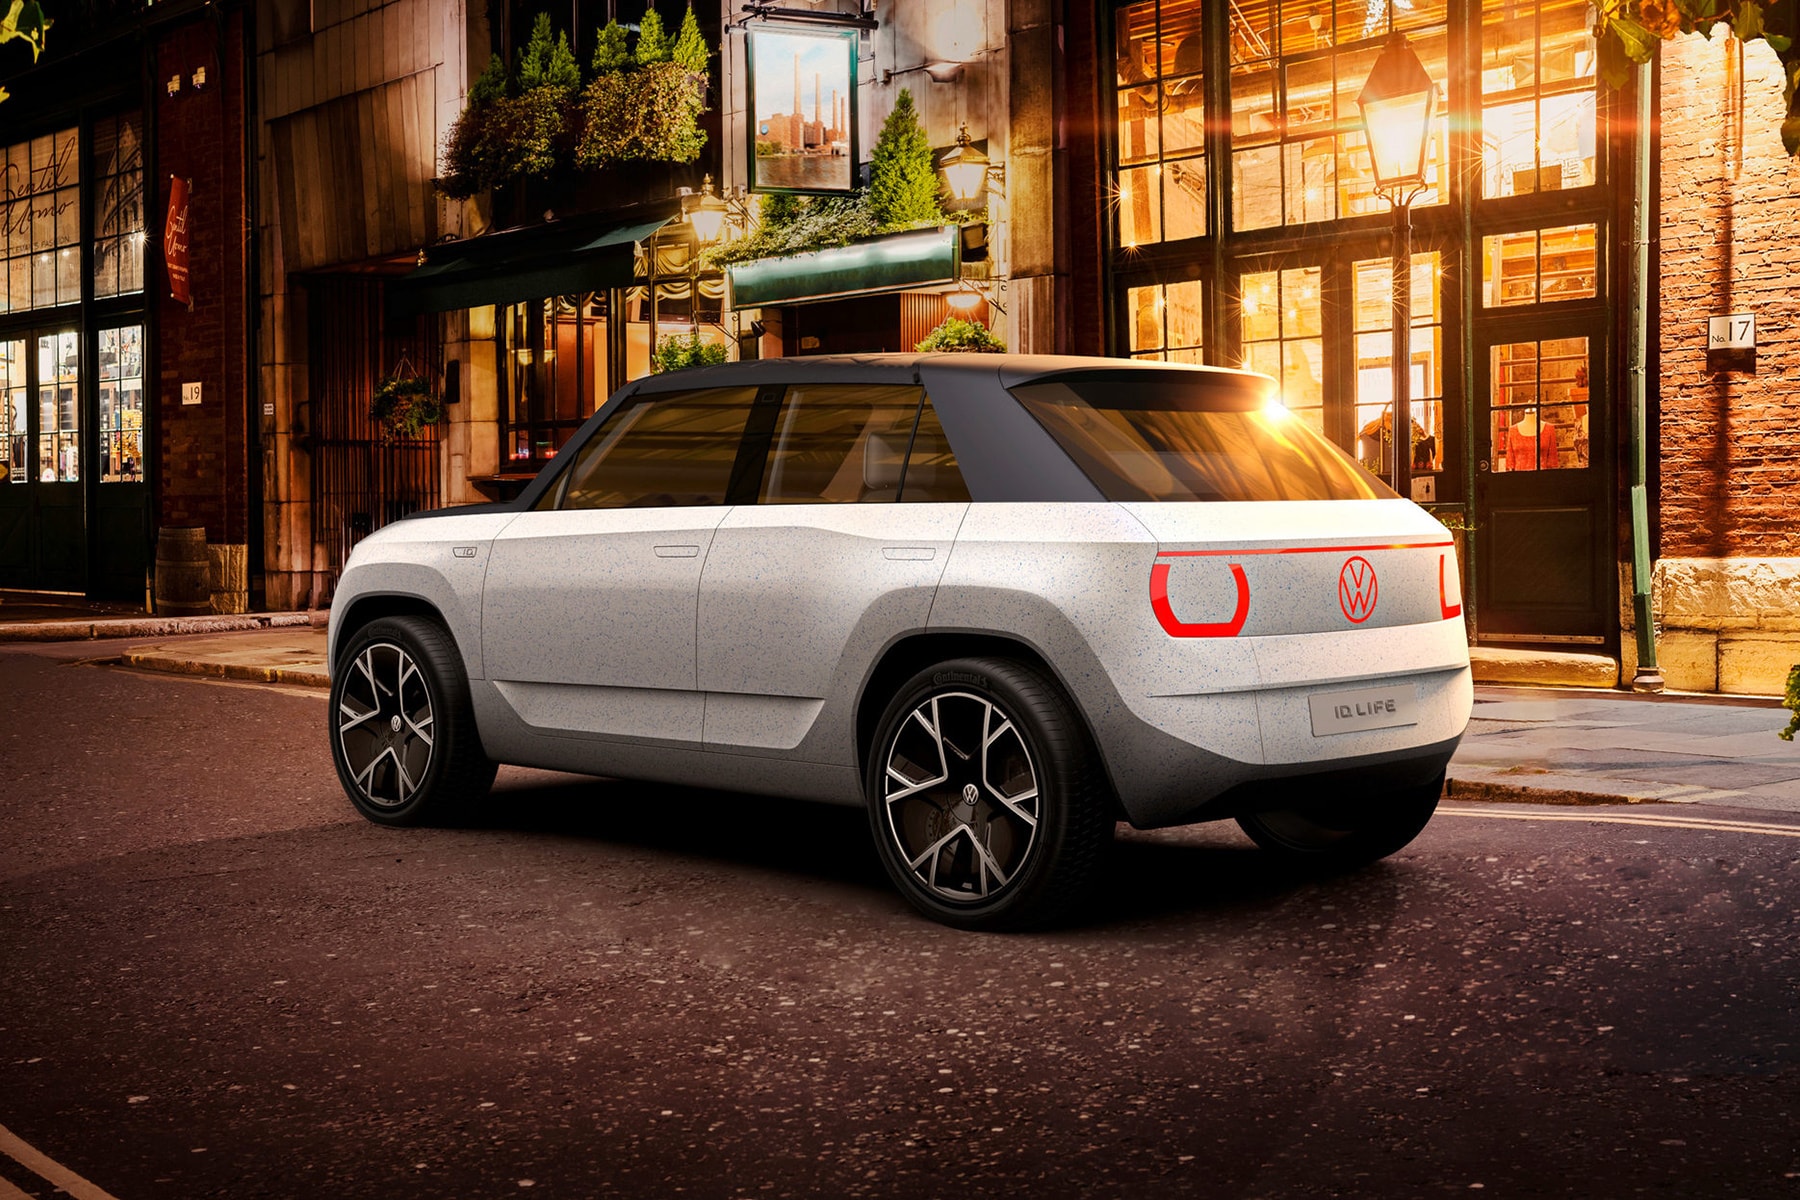 Volkswagen 推出全新小型電能概念車 ID. LIFE